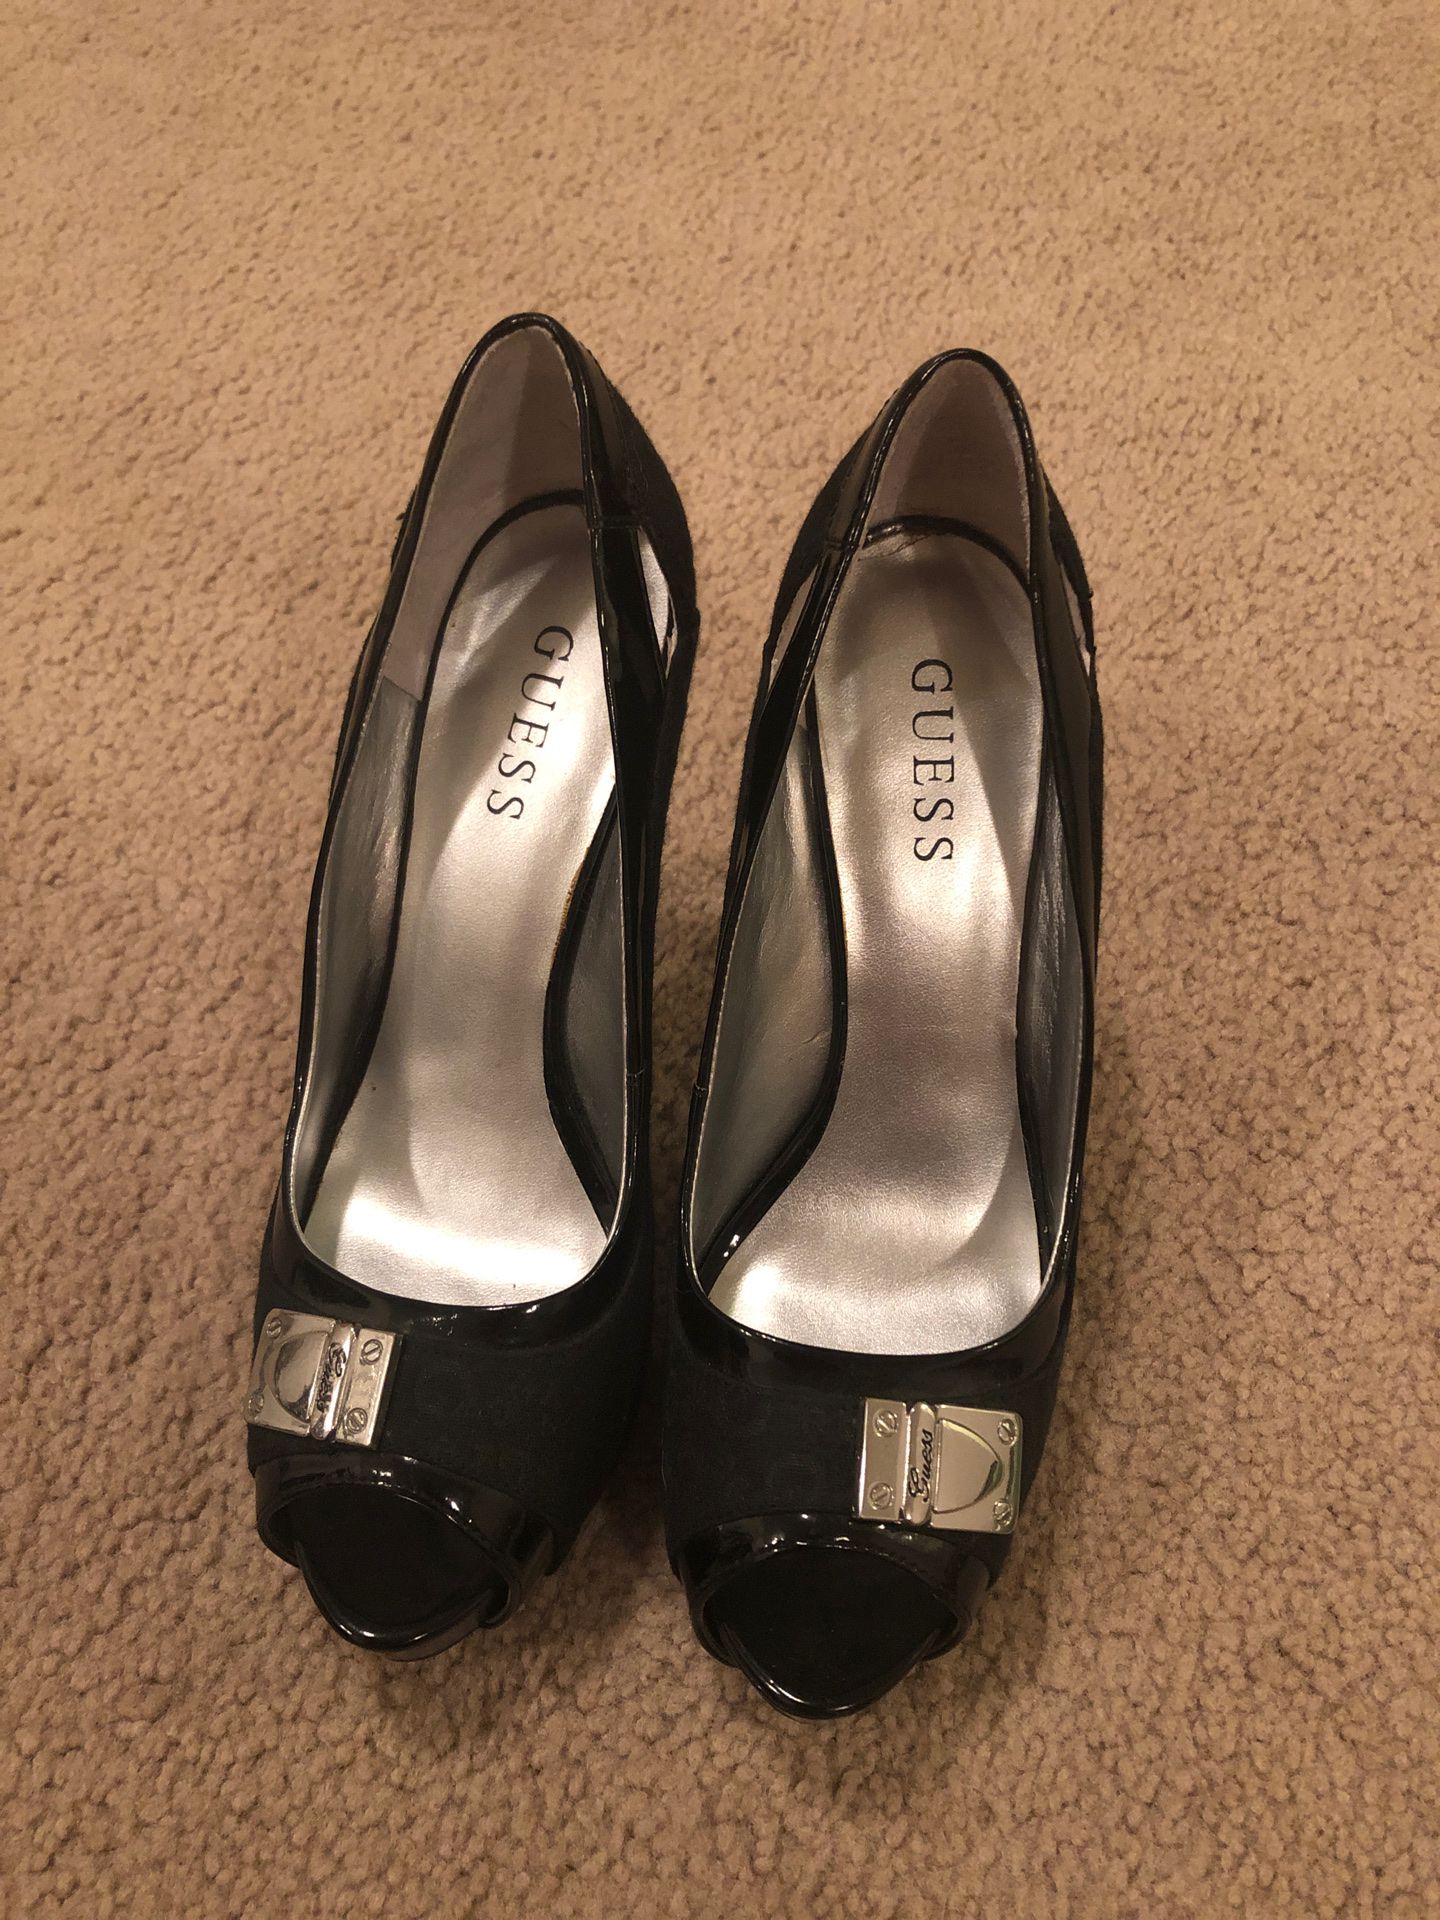 Guess high heels size 7.5